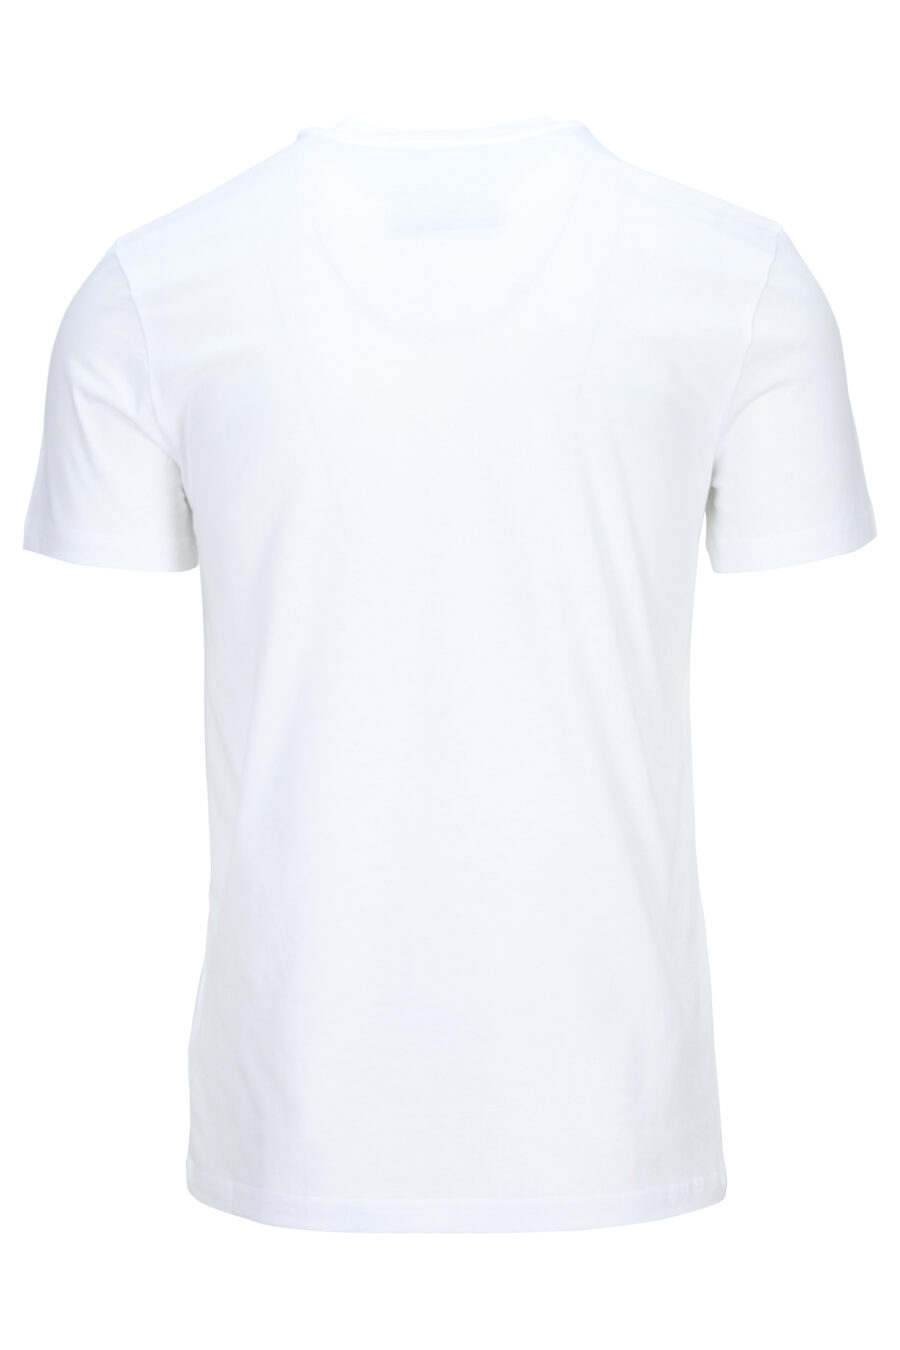 T-shirt branca com dupla pergunta maxillover - 889316649710 1